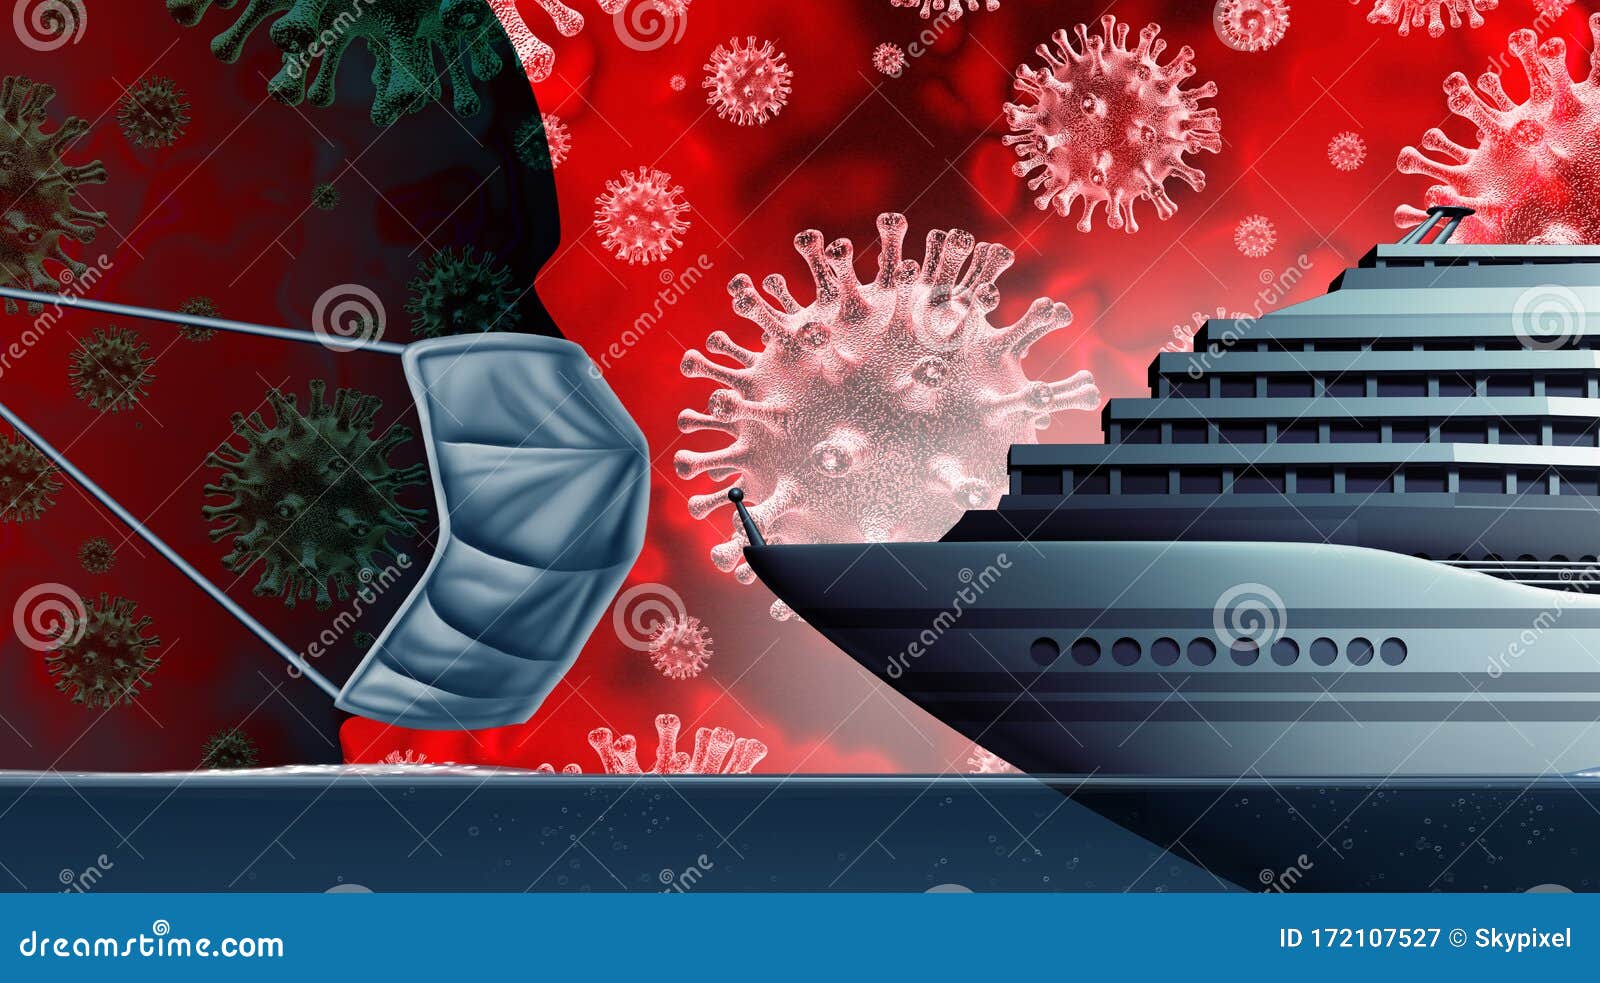 viruses on cruise ship